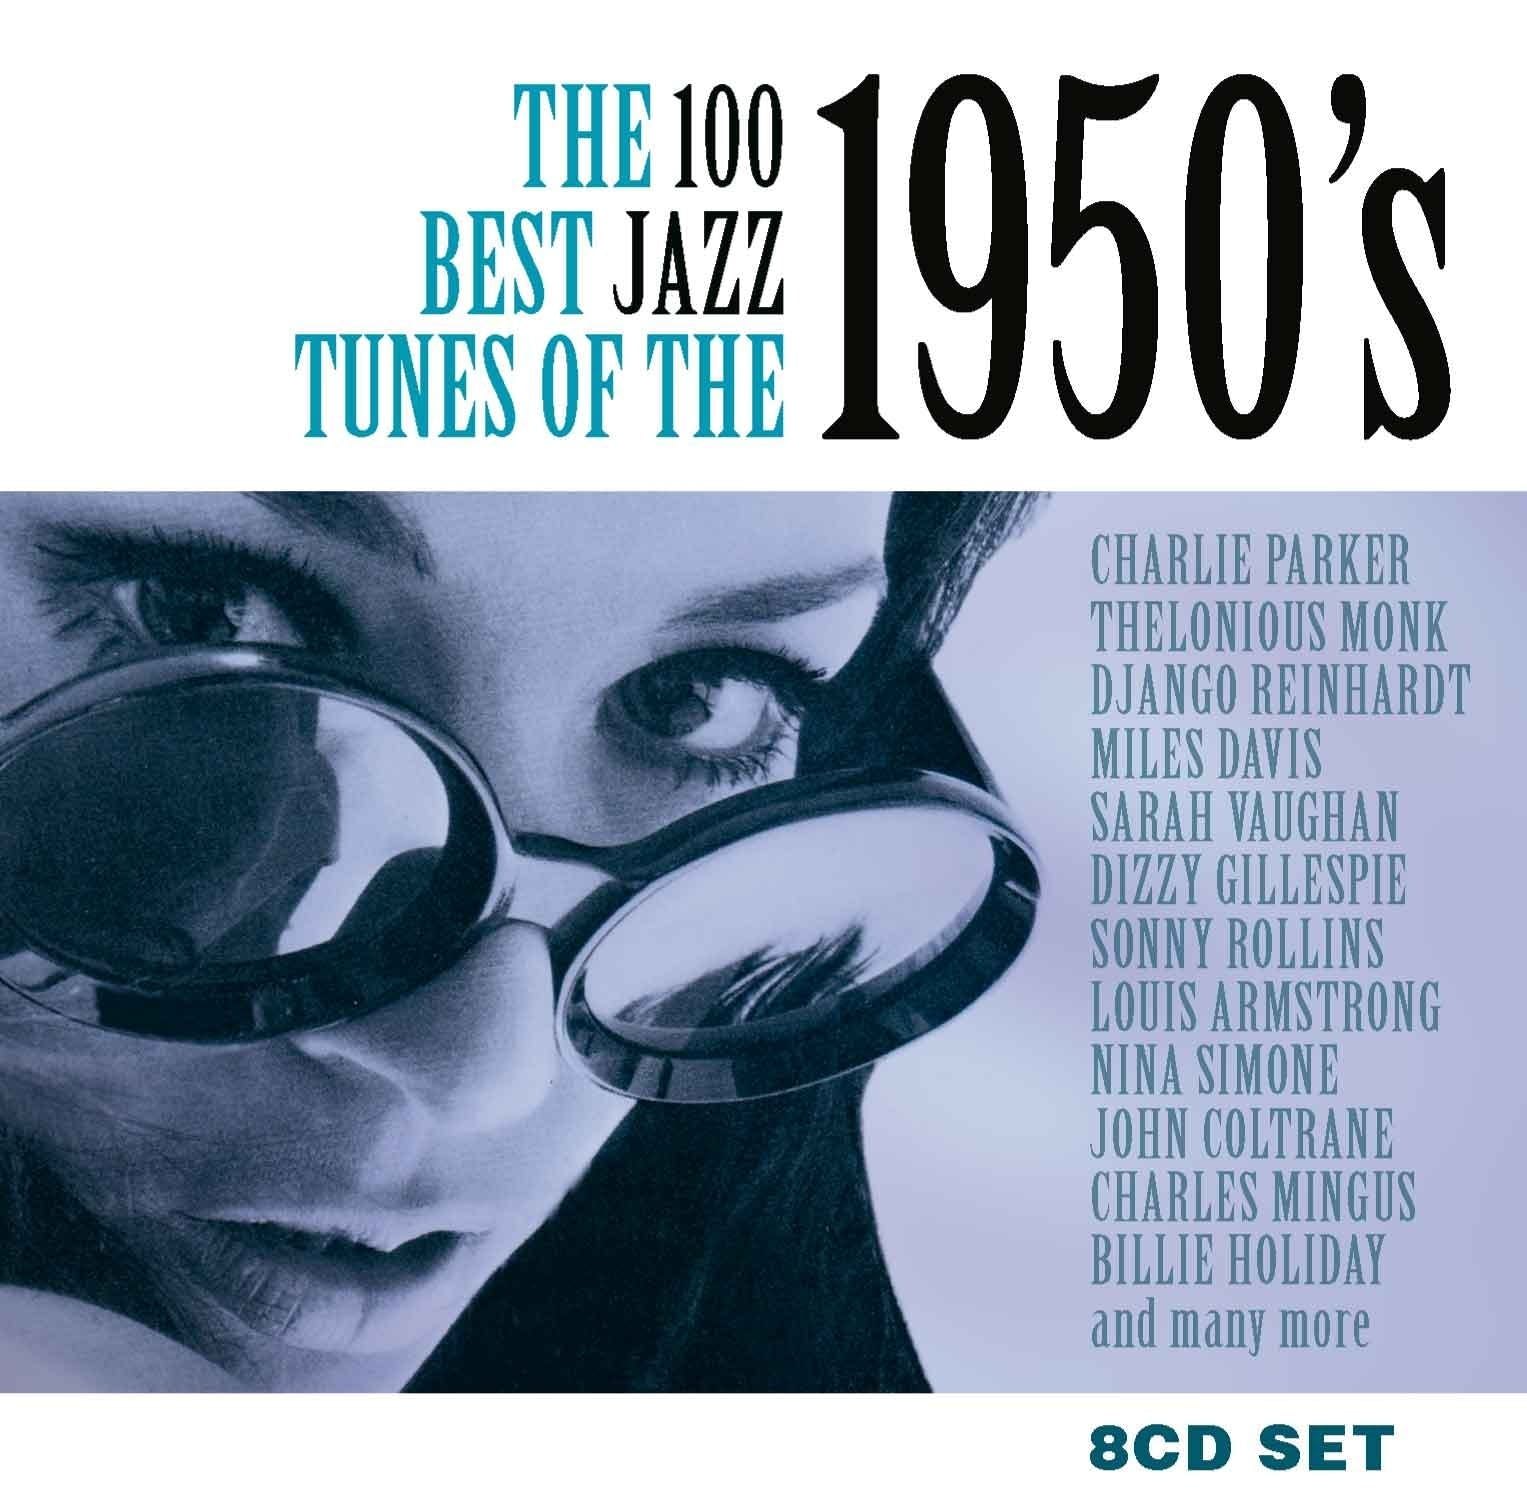 100 Best Jazz Tunes of the 1950s 1